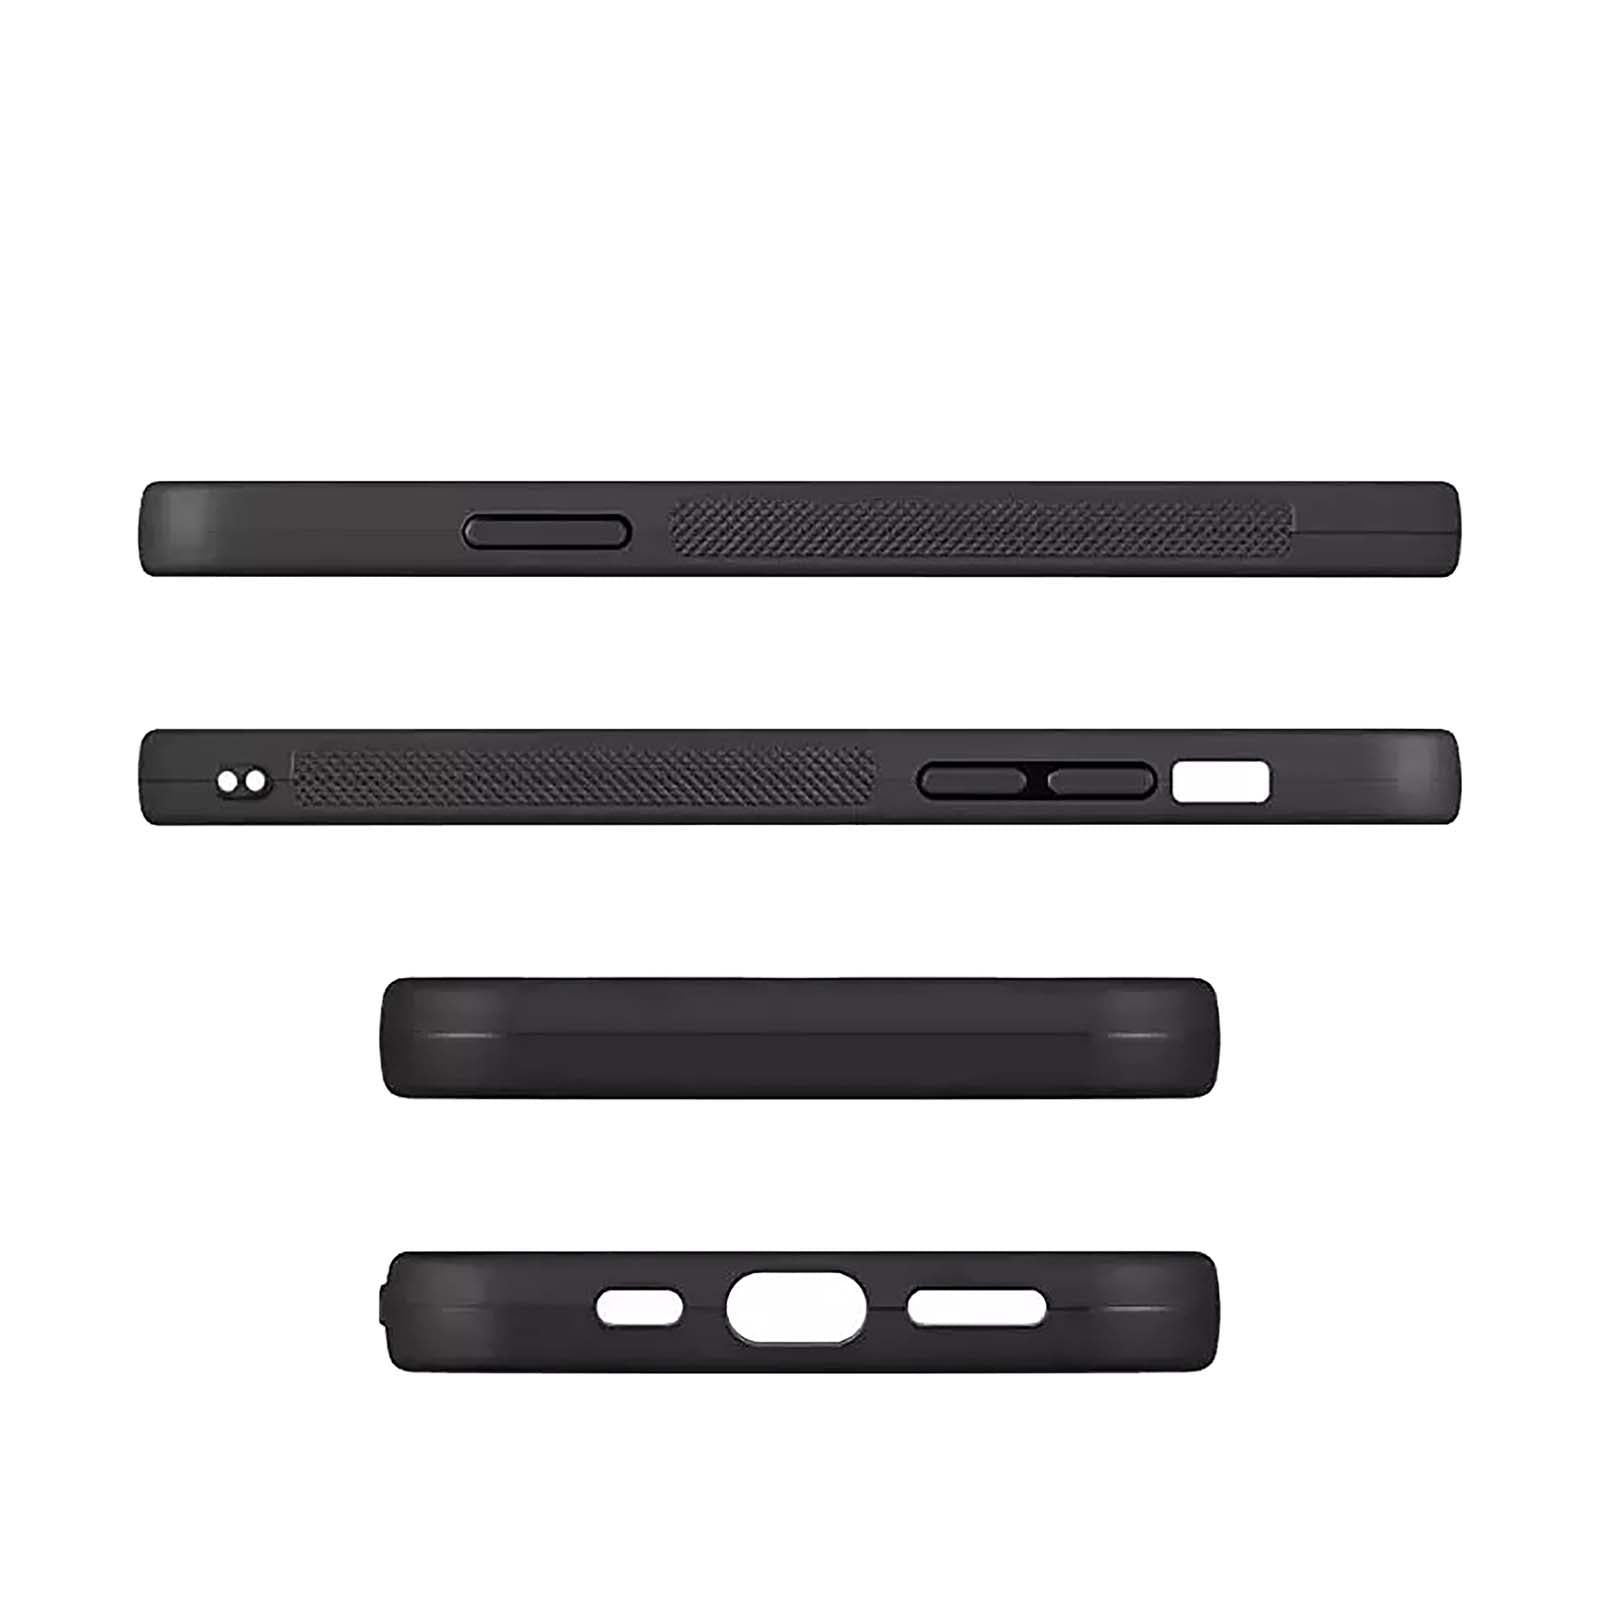 iPhone 11 Pro - Black TPU Rubber Sublimation Phone Case